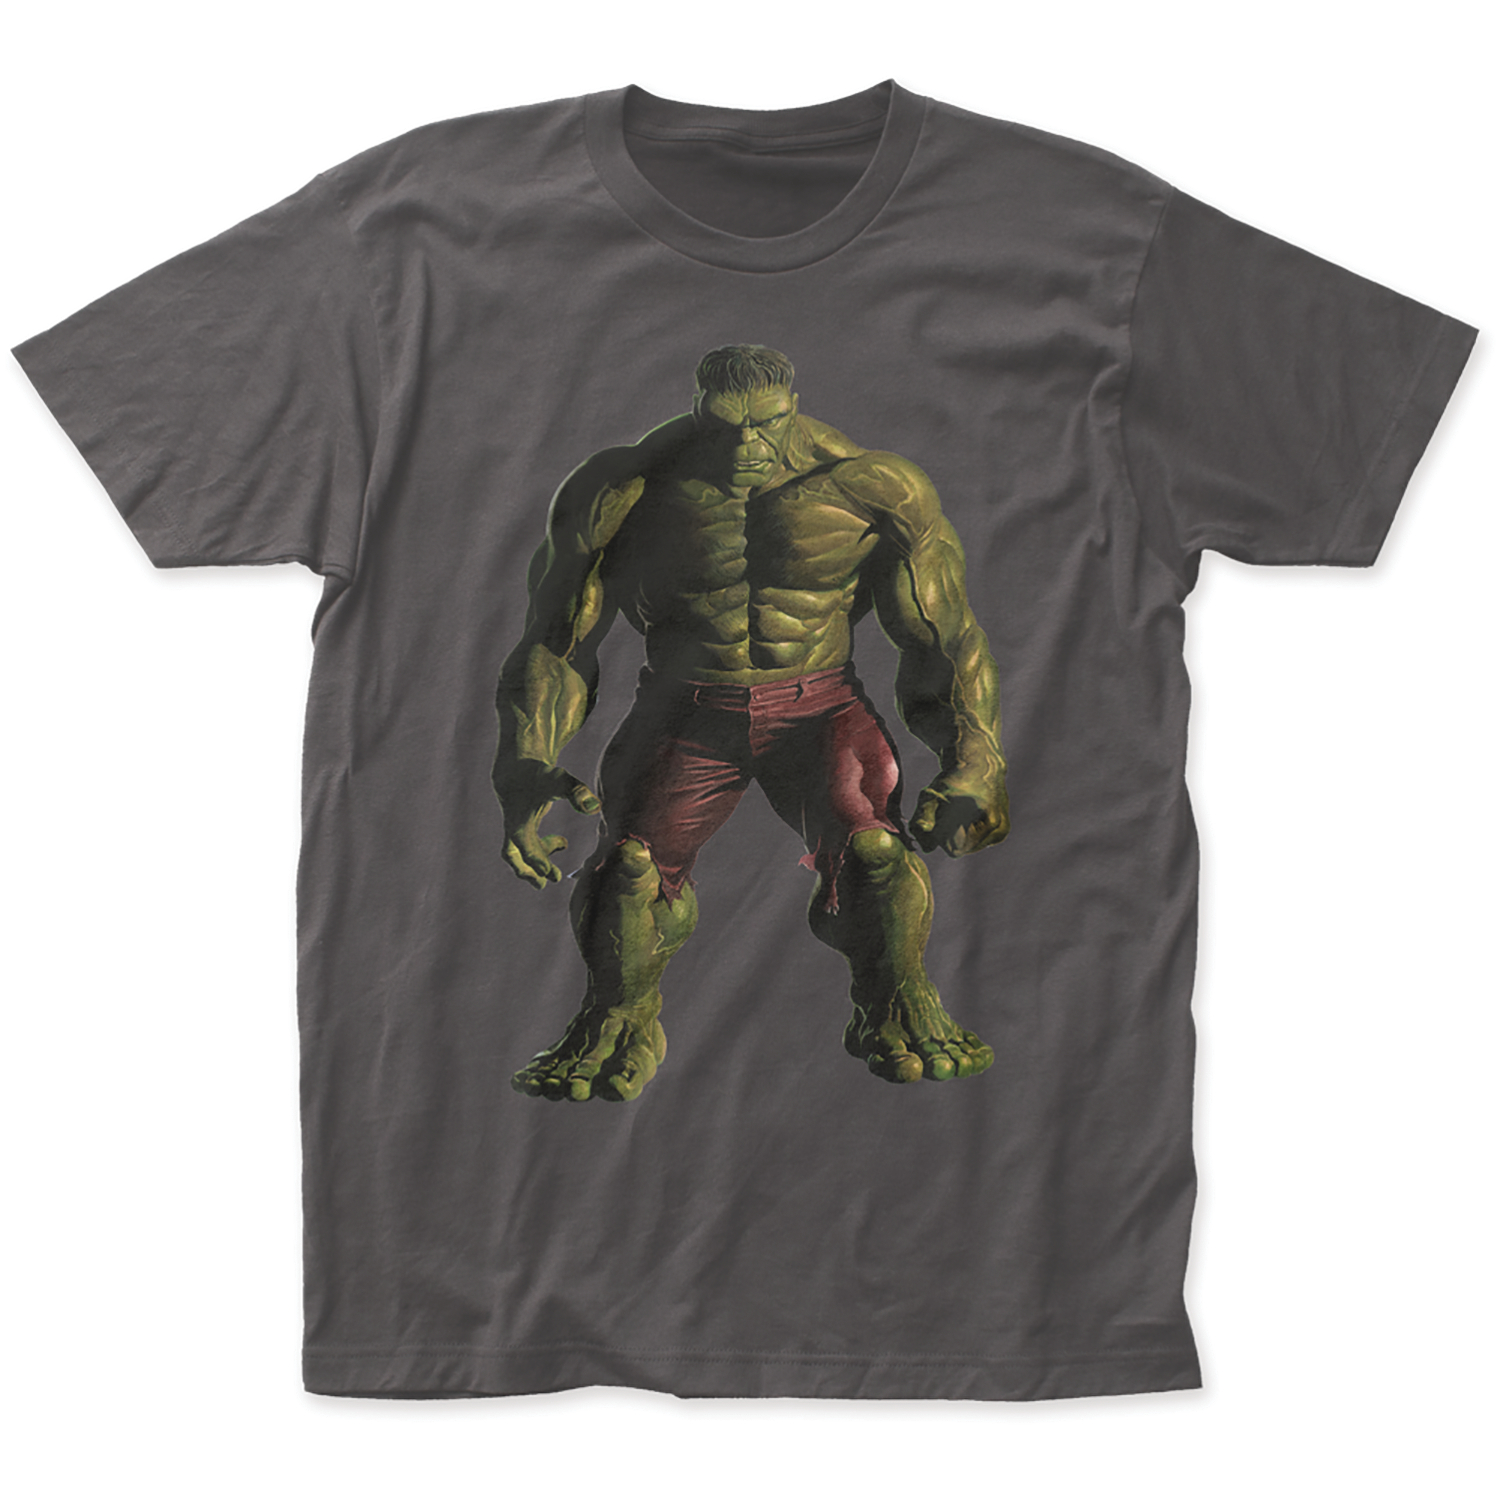 Marvel Px The Incredible Hulk Full Body T-Shirt Large